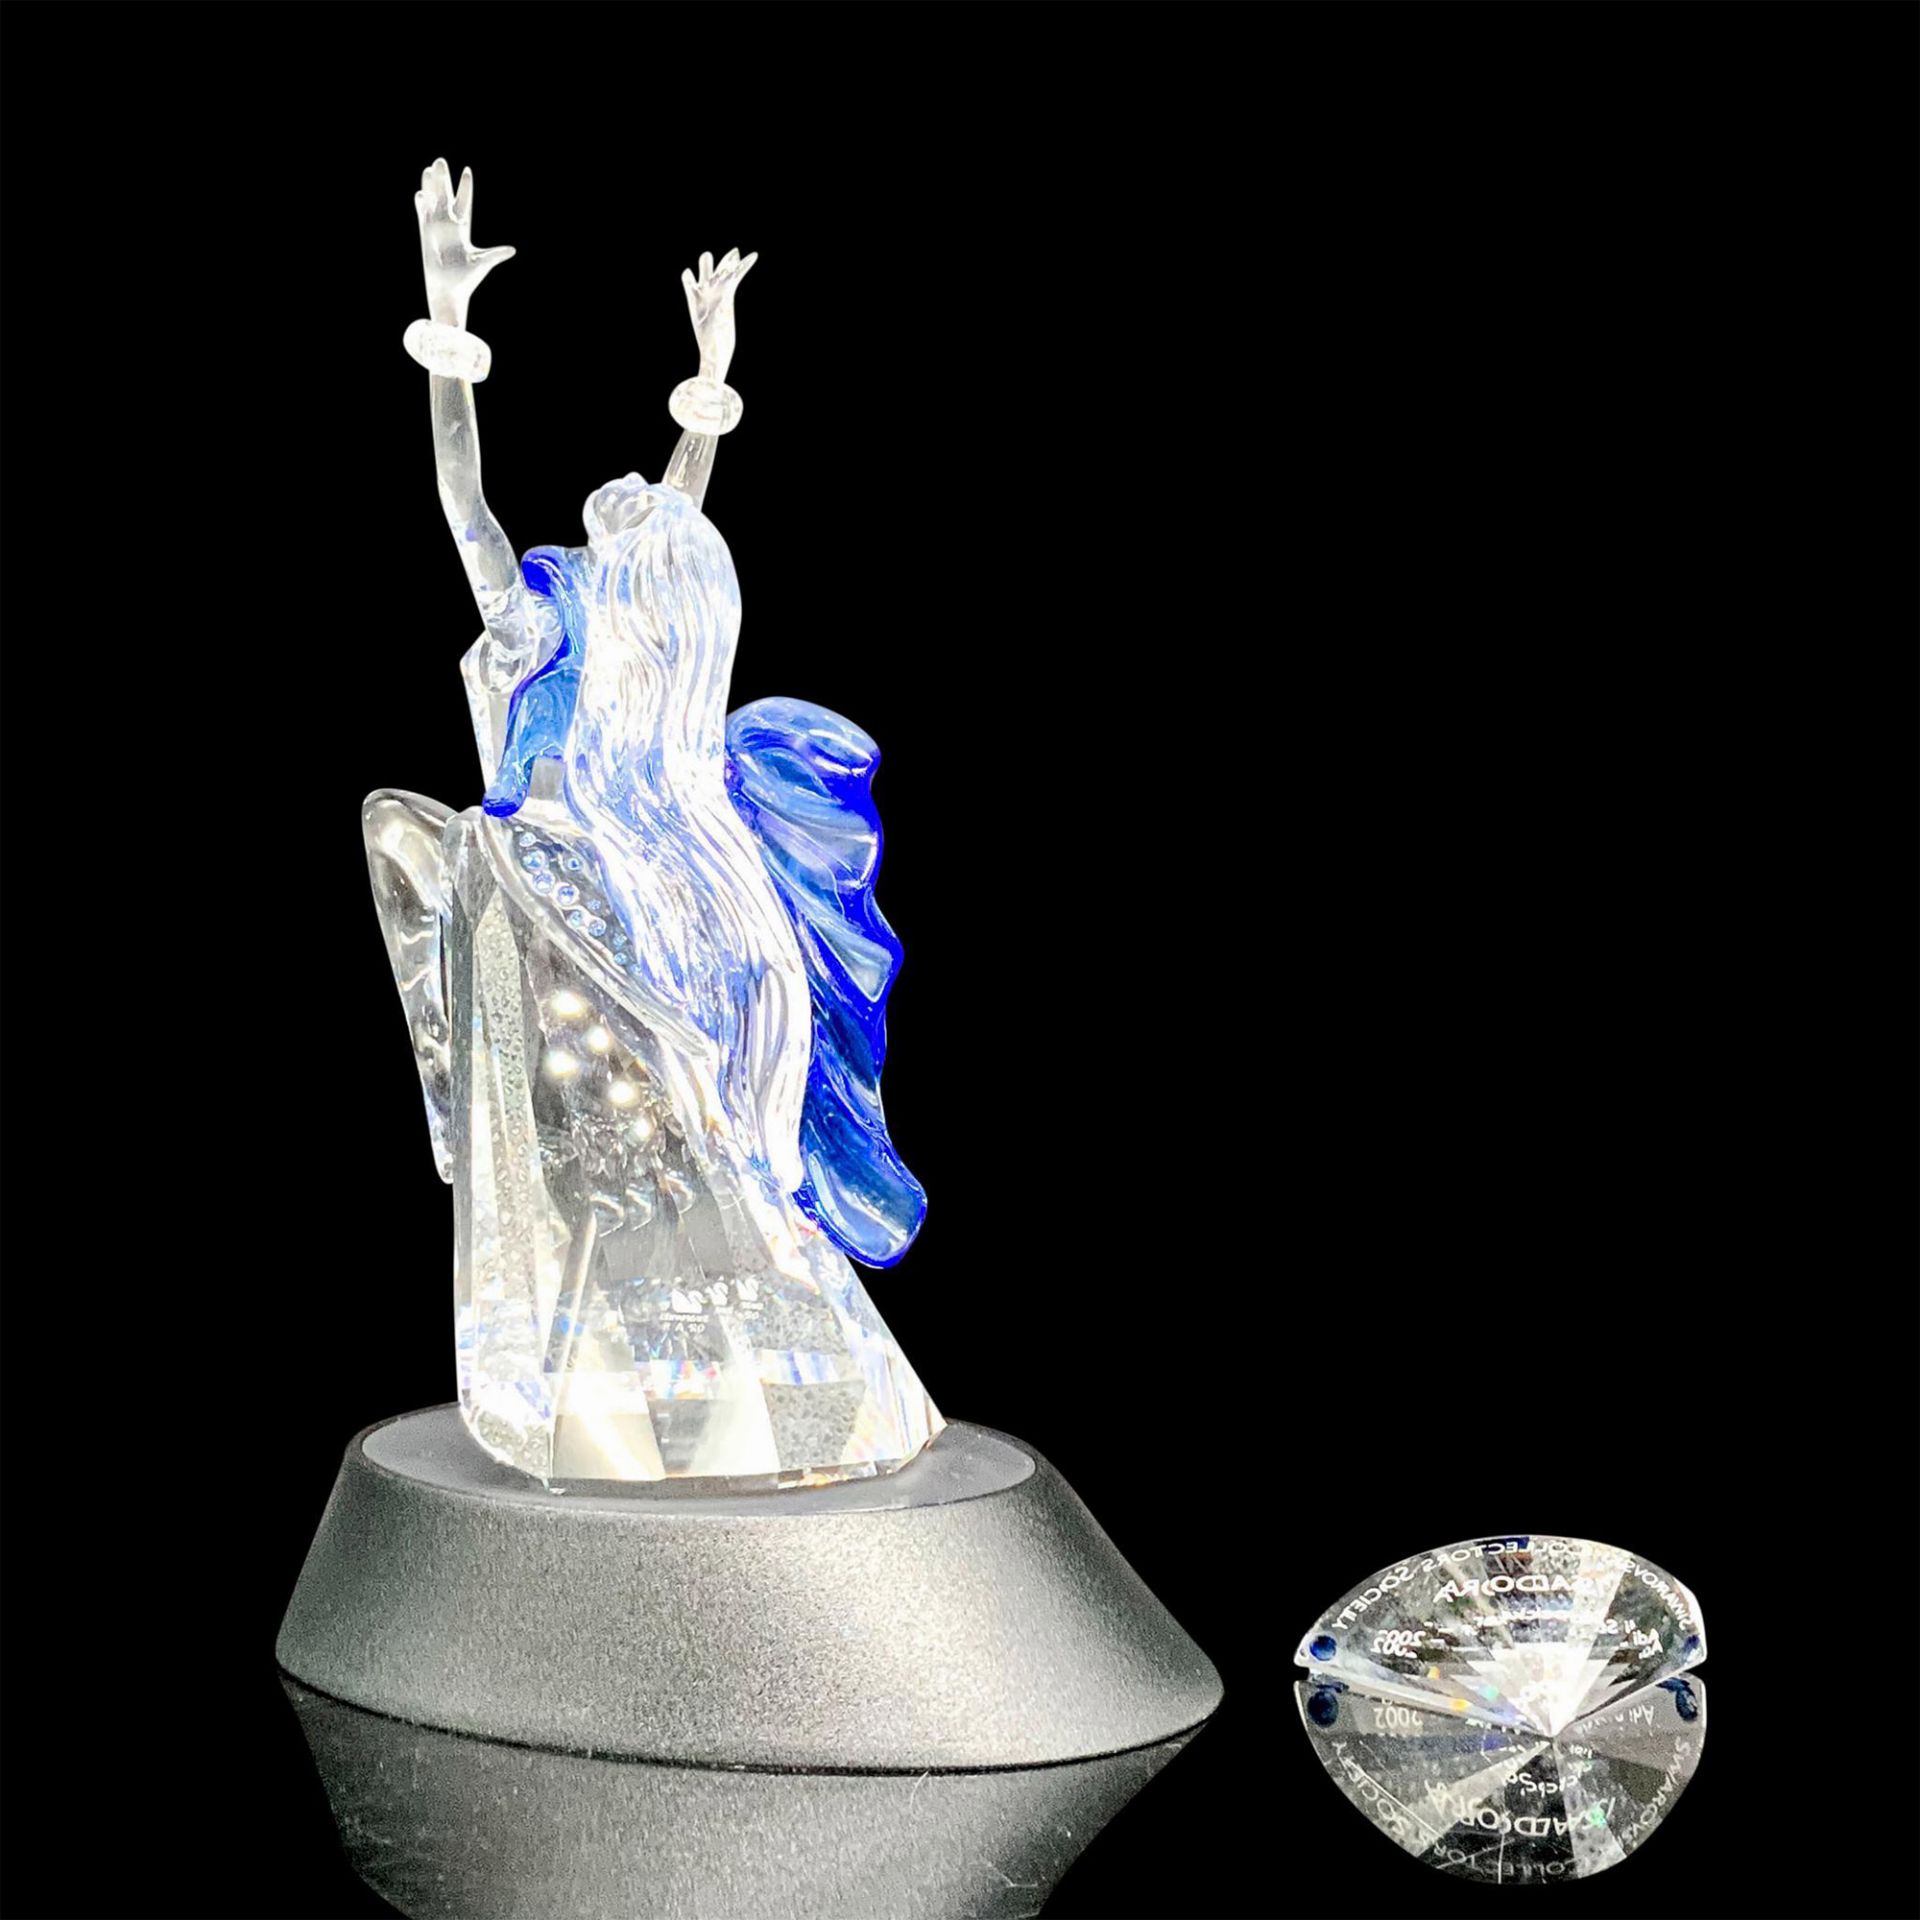 3pc Swarovski Crystal Figurine + Base, Plaque Set, Isadora - Image 2 of 5